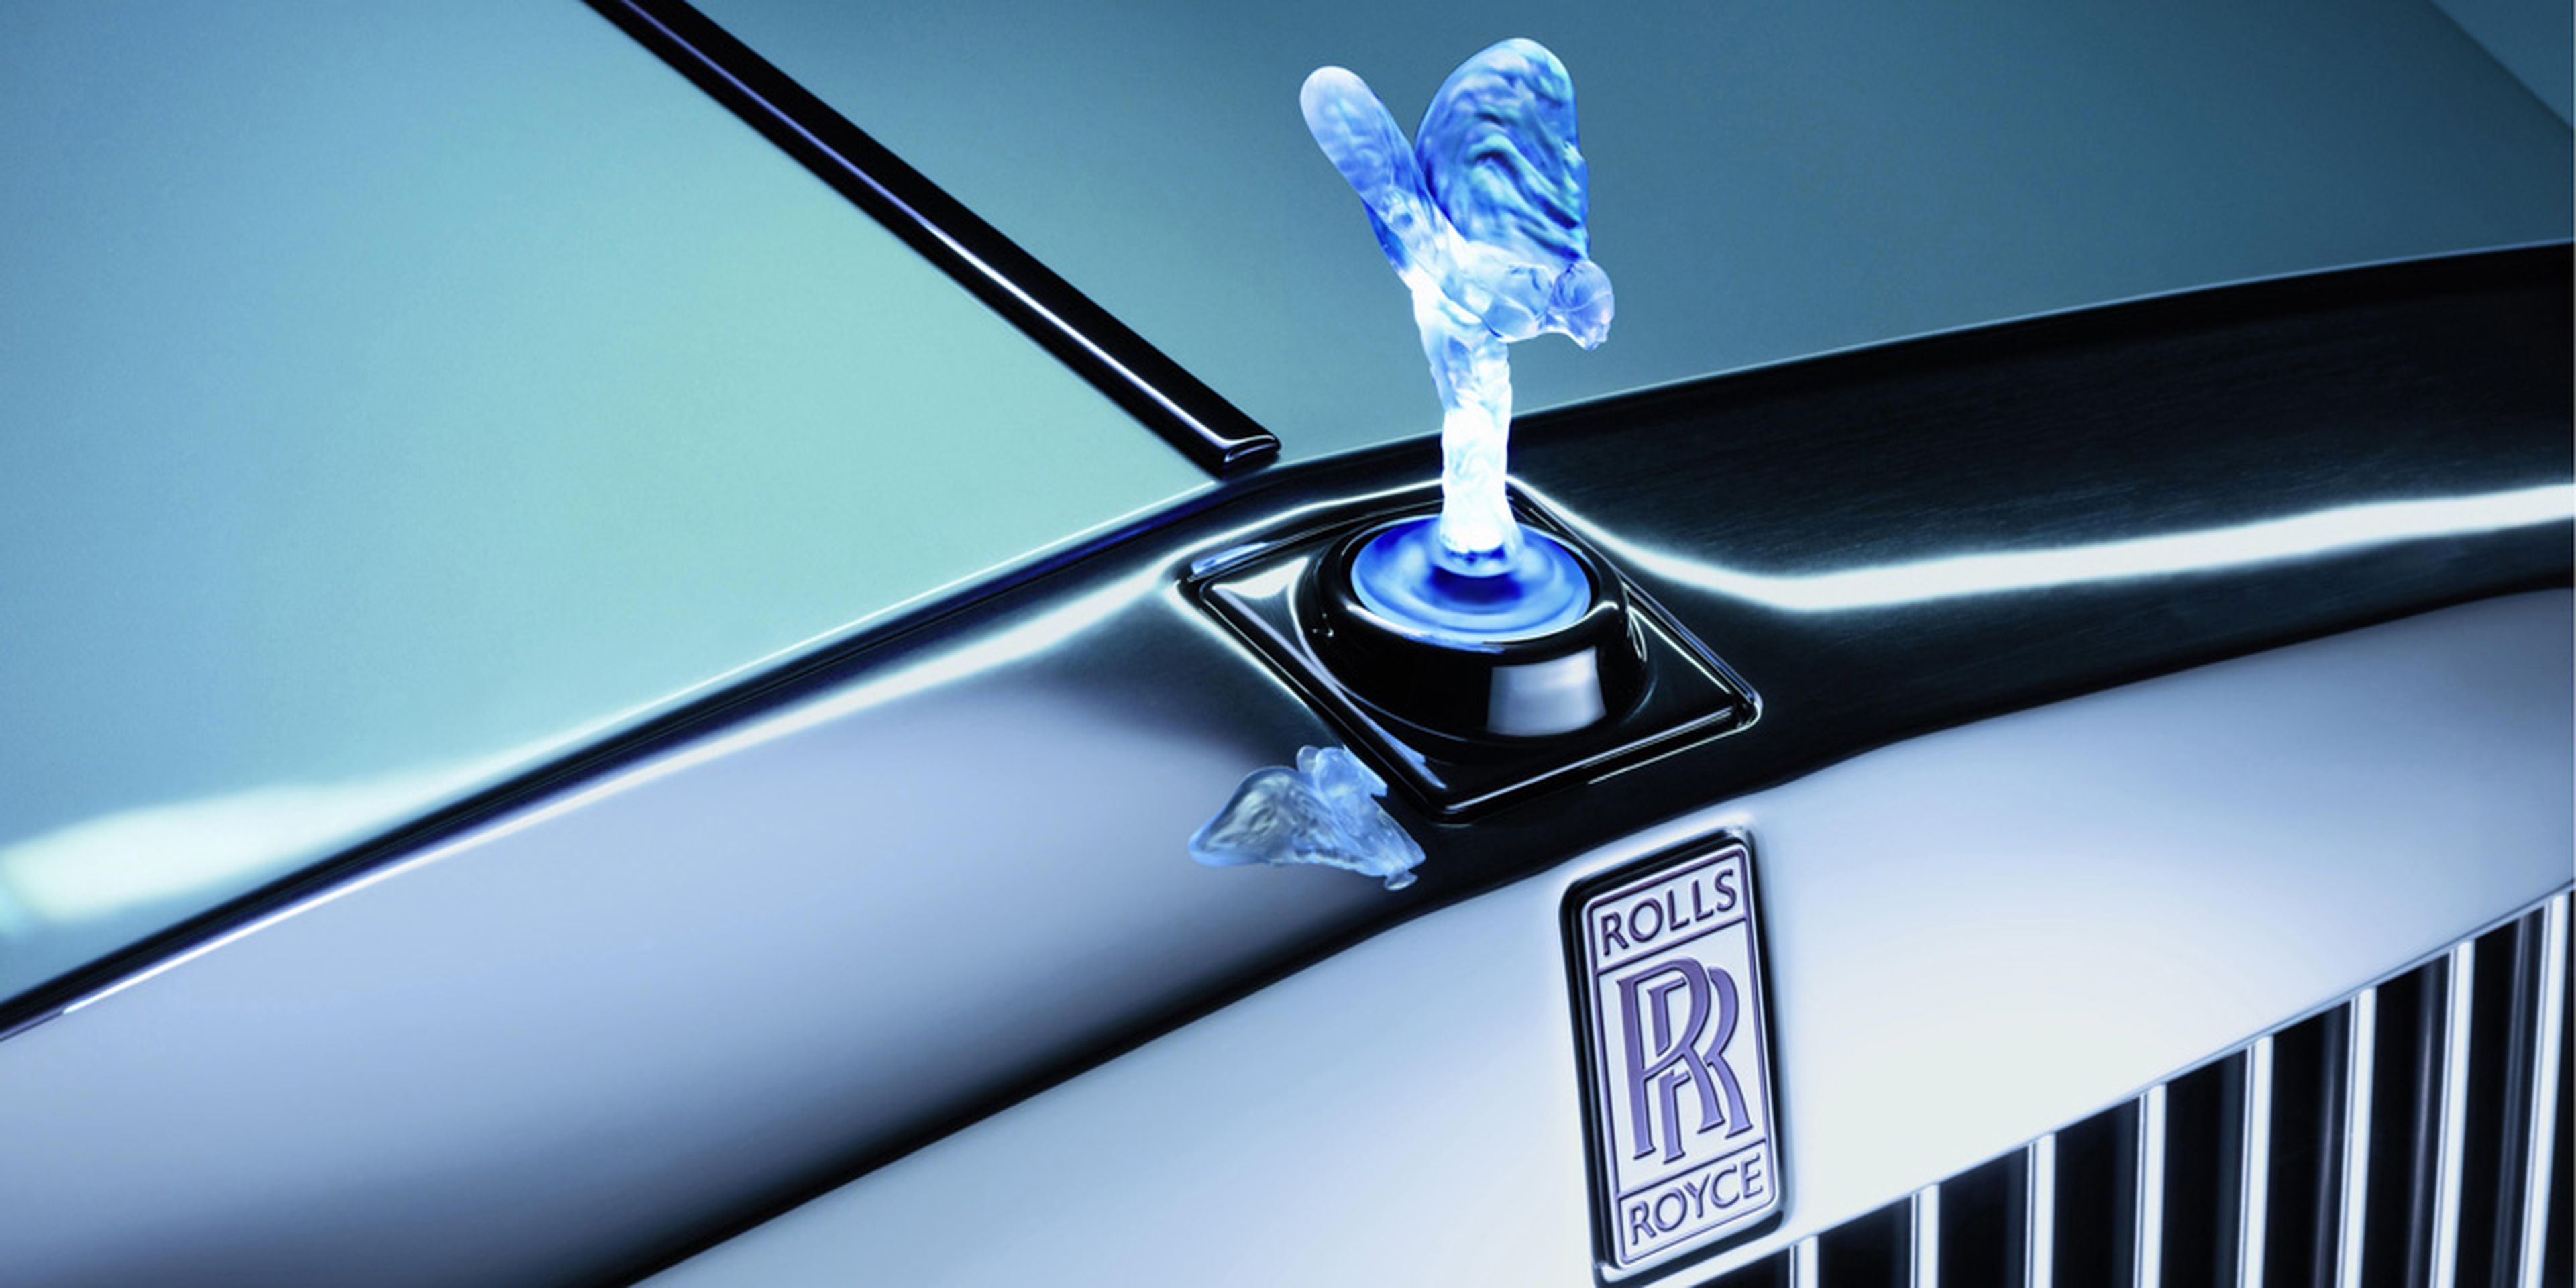 parrilla Rolls Royce 102 ex